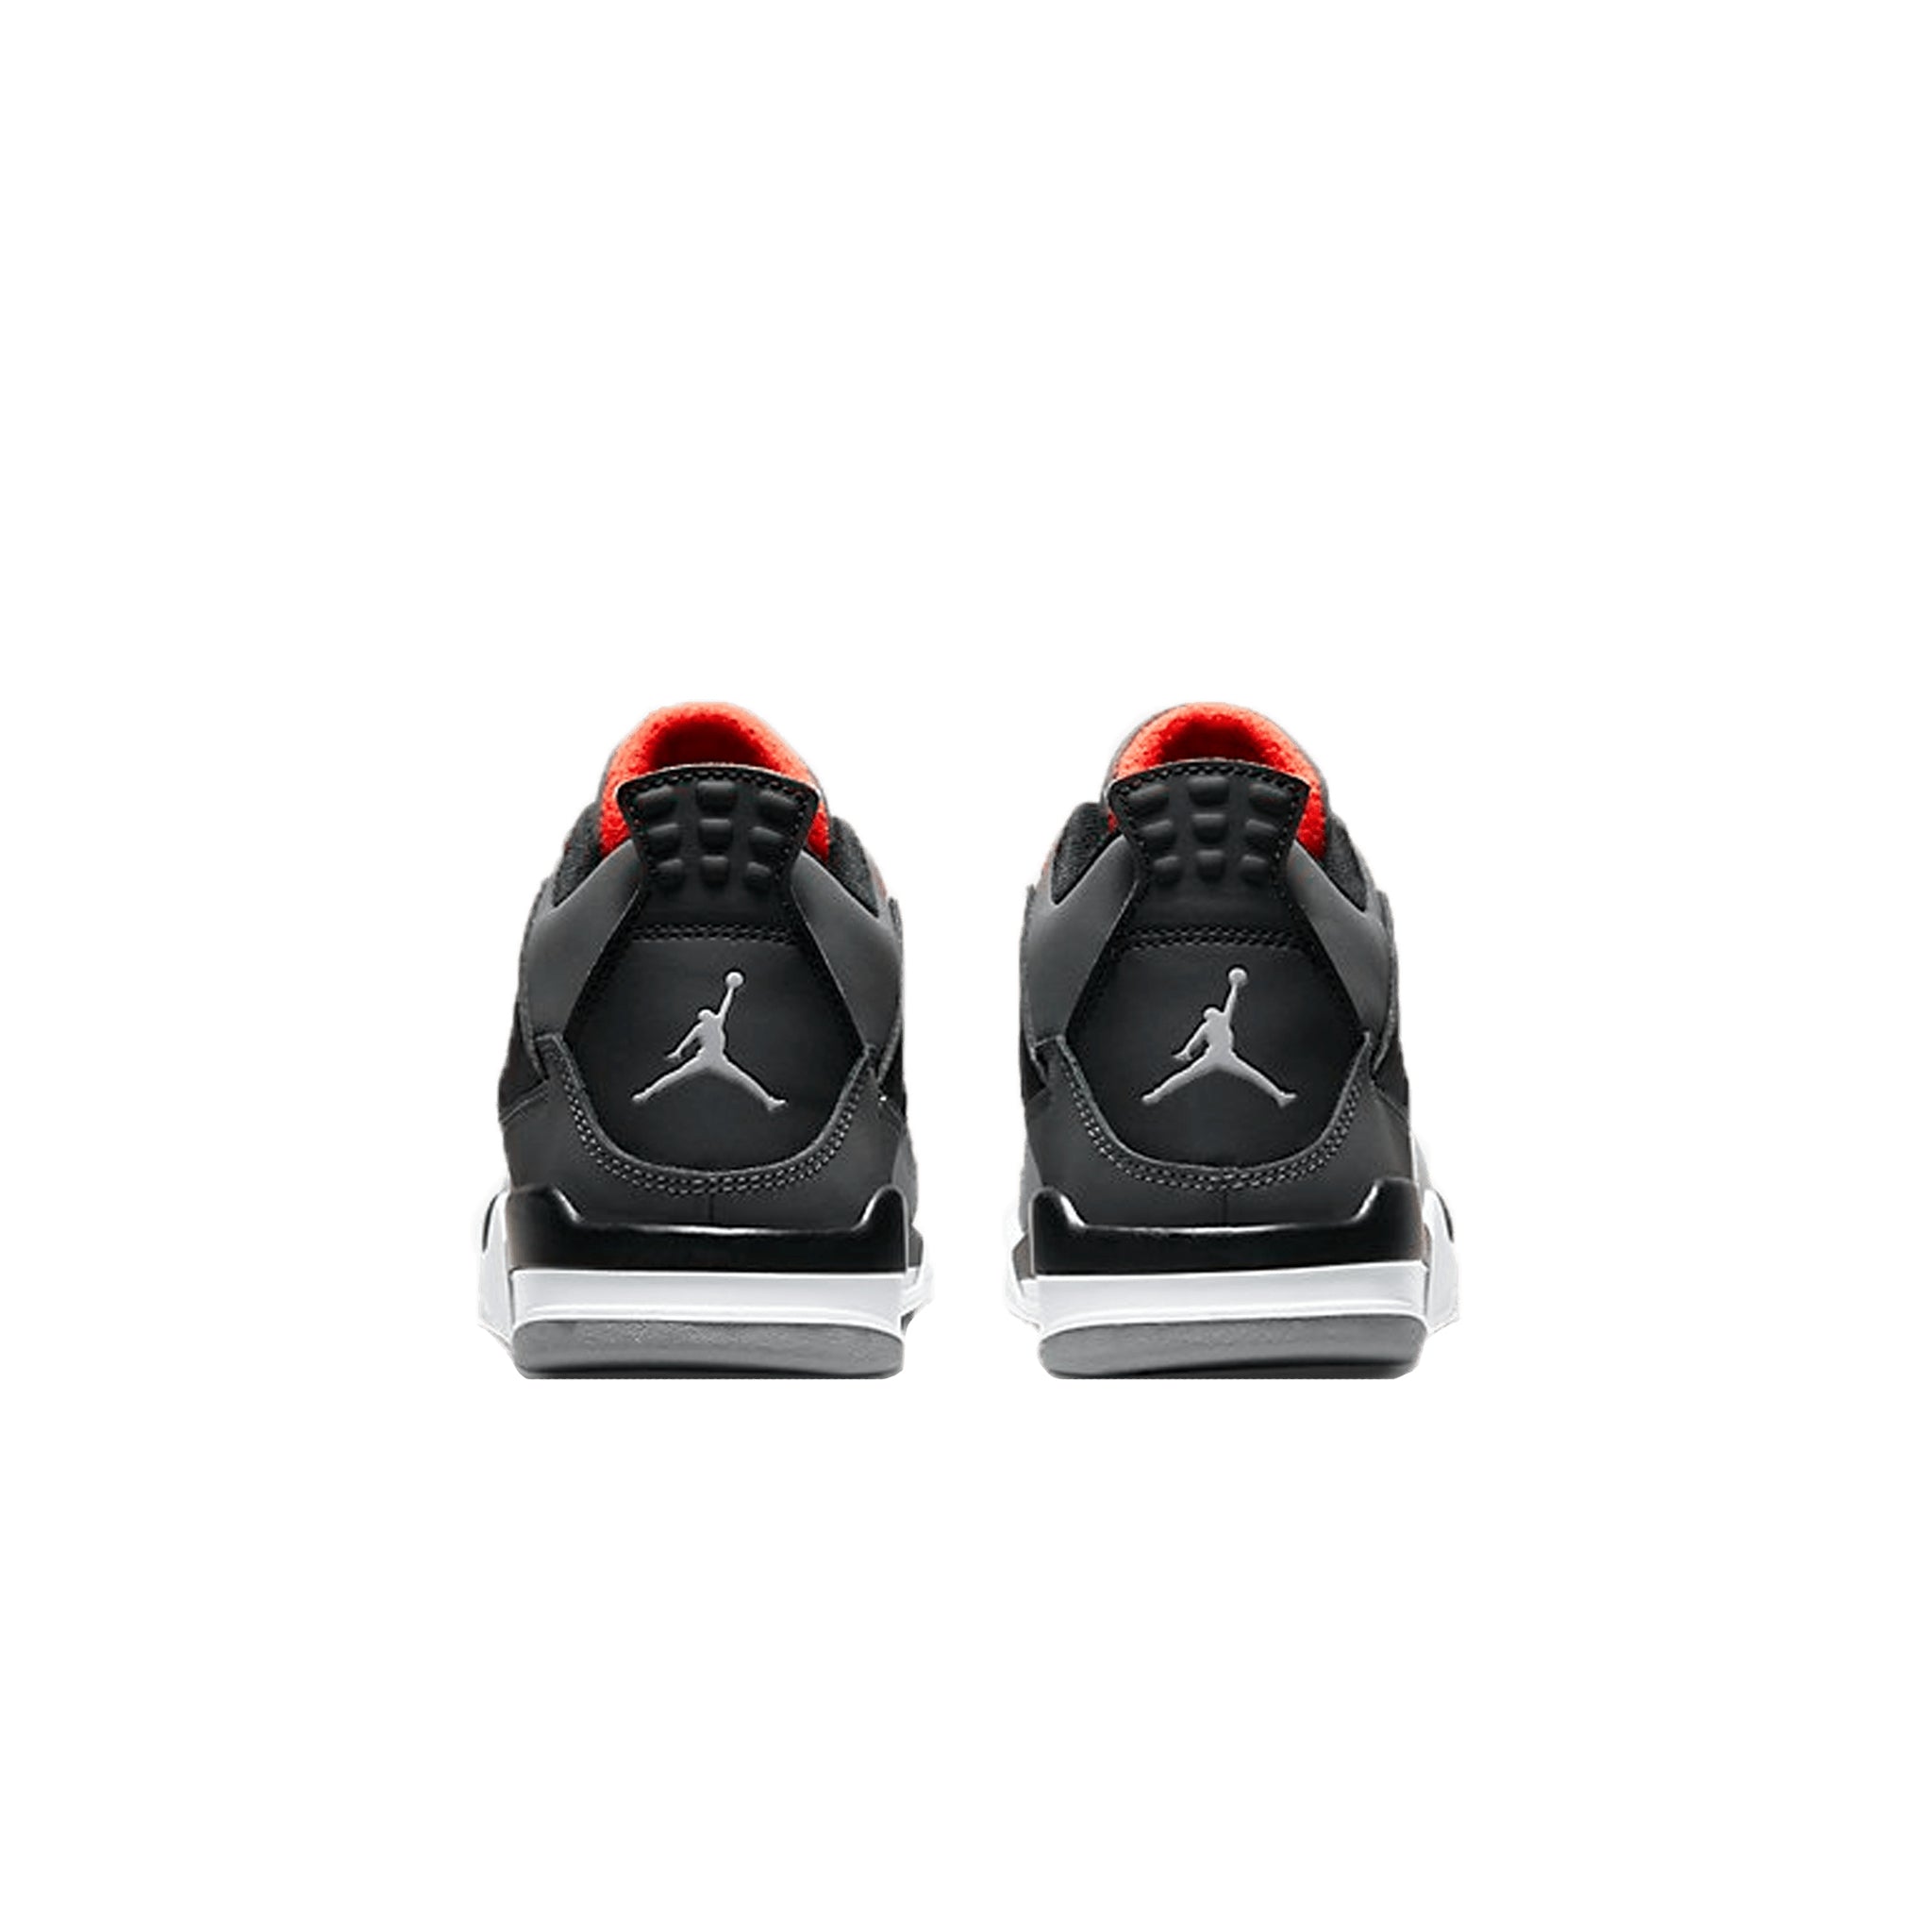 Air Jordan 4 'Louis Vuitton Don' Custom by Dank for Wale